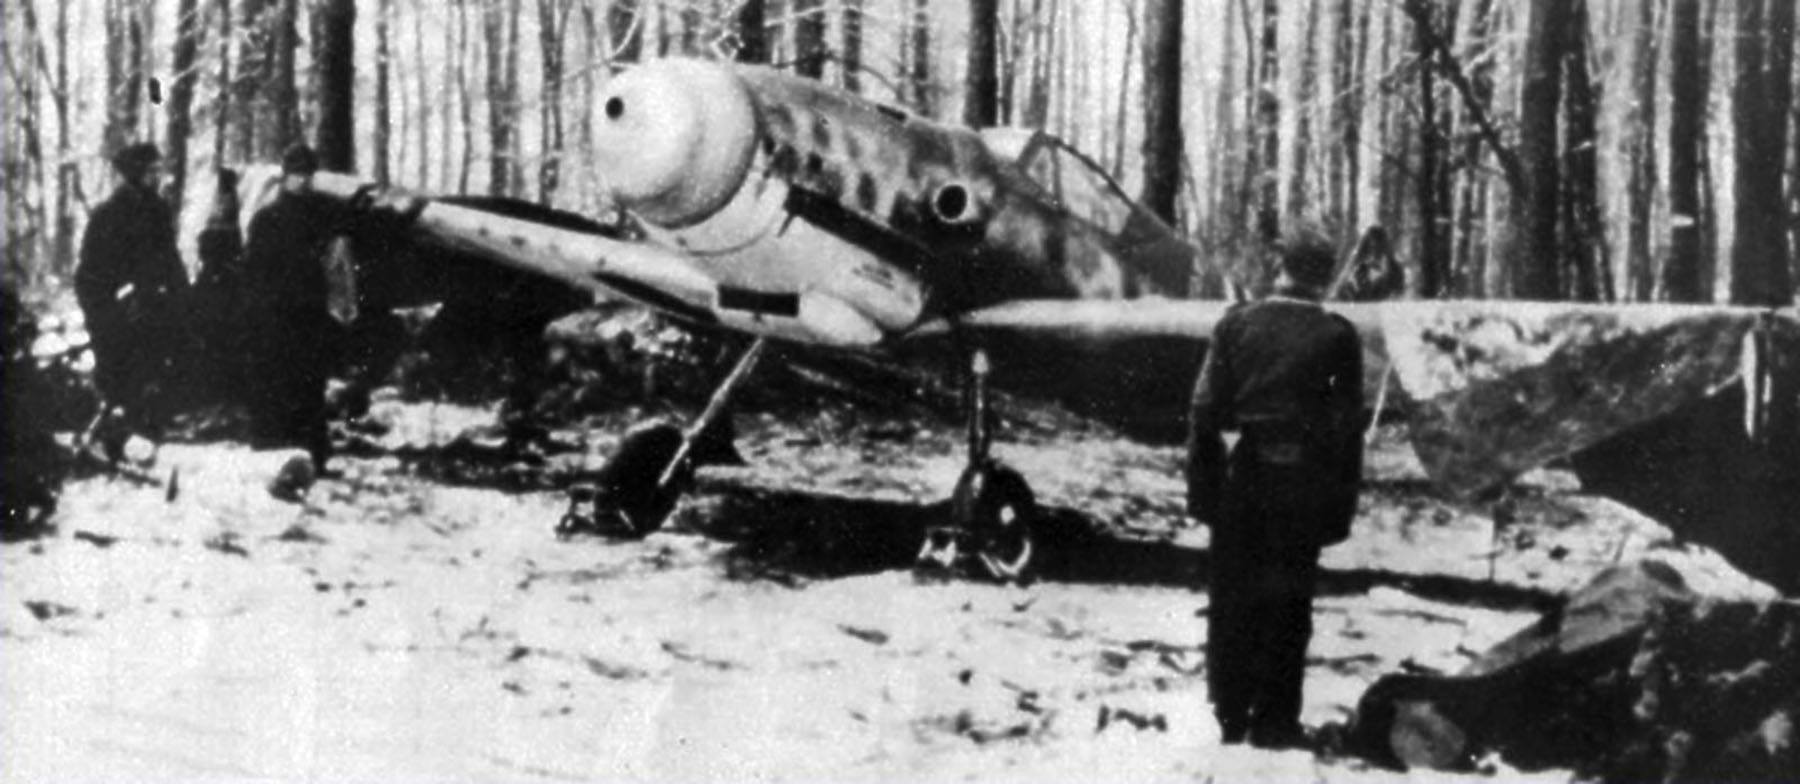 Messerschmitt Bf 109G14 Erla 12.JG53 Blue 4 WNr 462789 Germany 13th Jan 1945 03